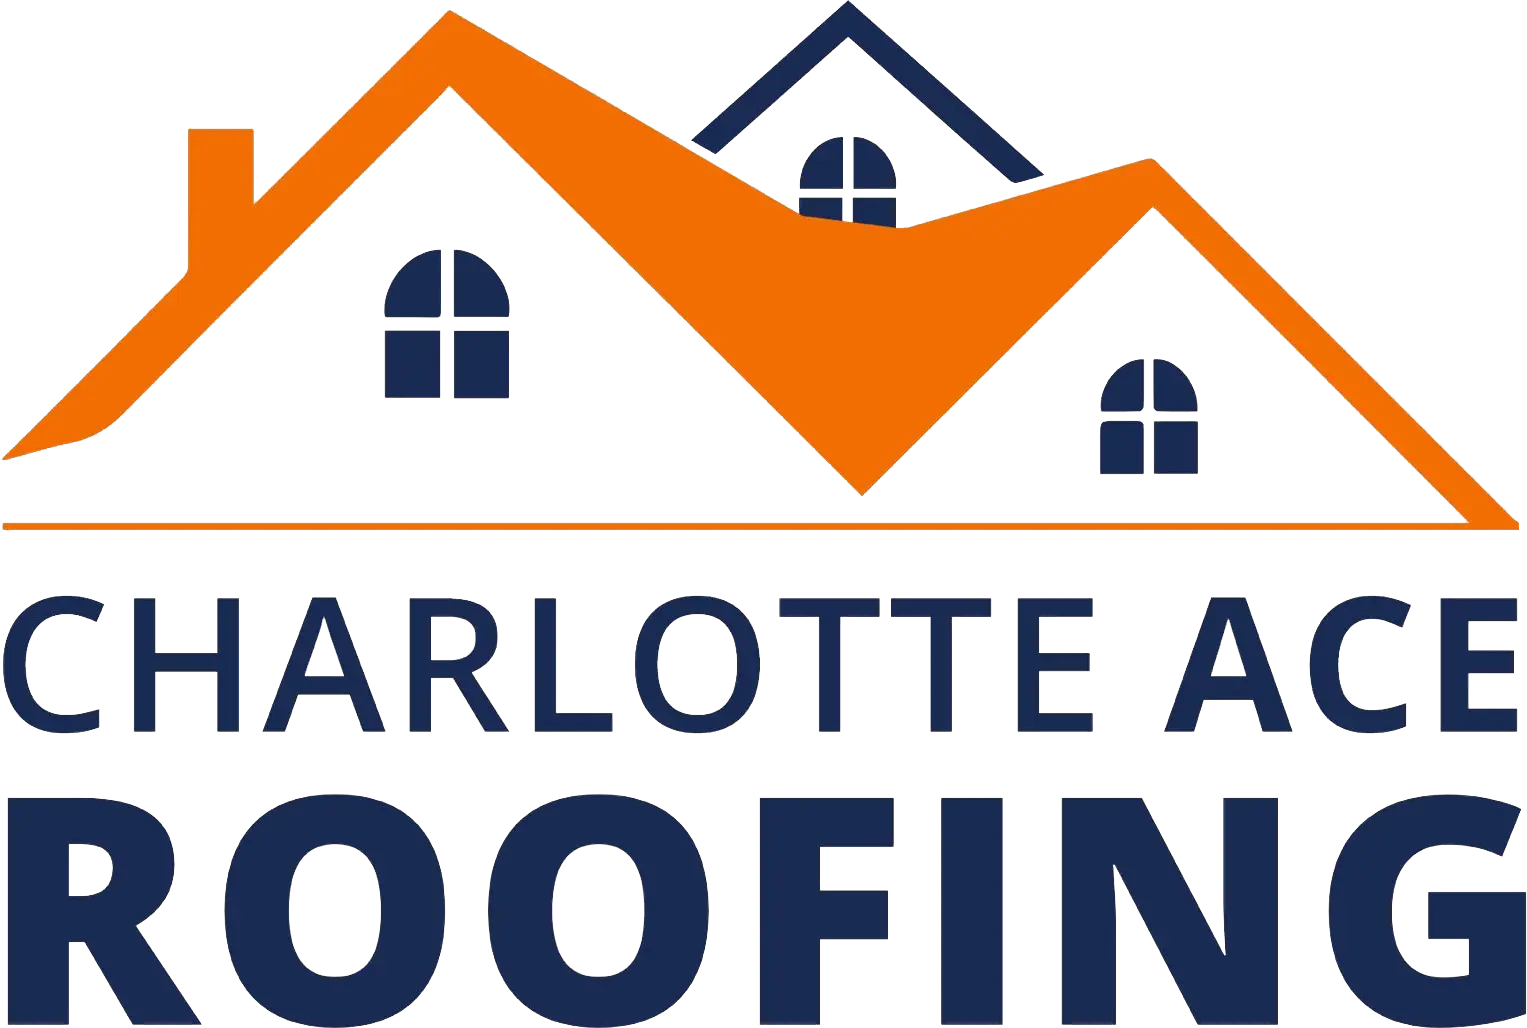 Roofing Company Logo